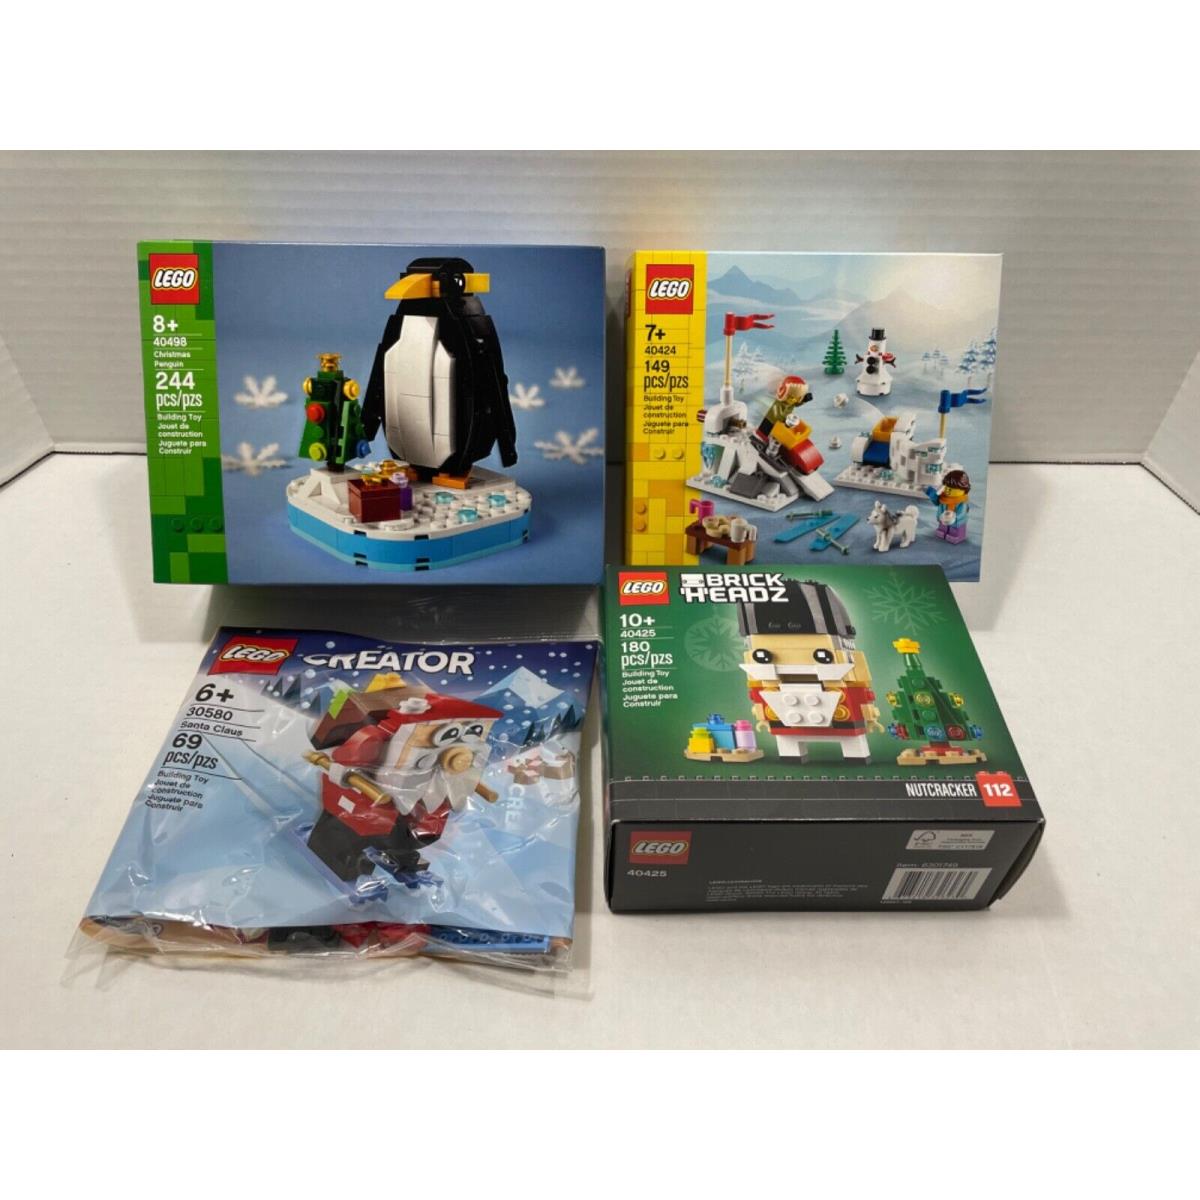 Lego Christmas Lot- Penguin Santa Etc. 40498 40425 40424 30580 - All